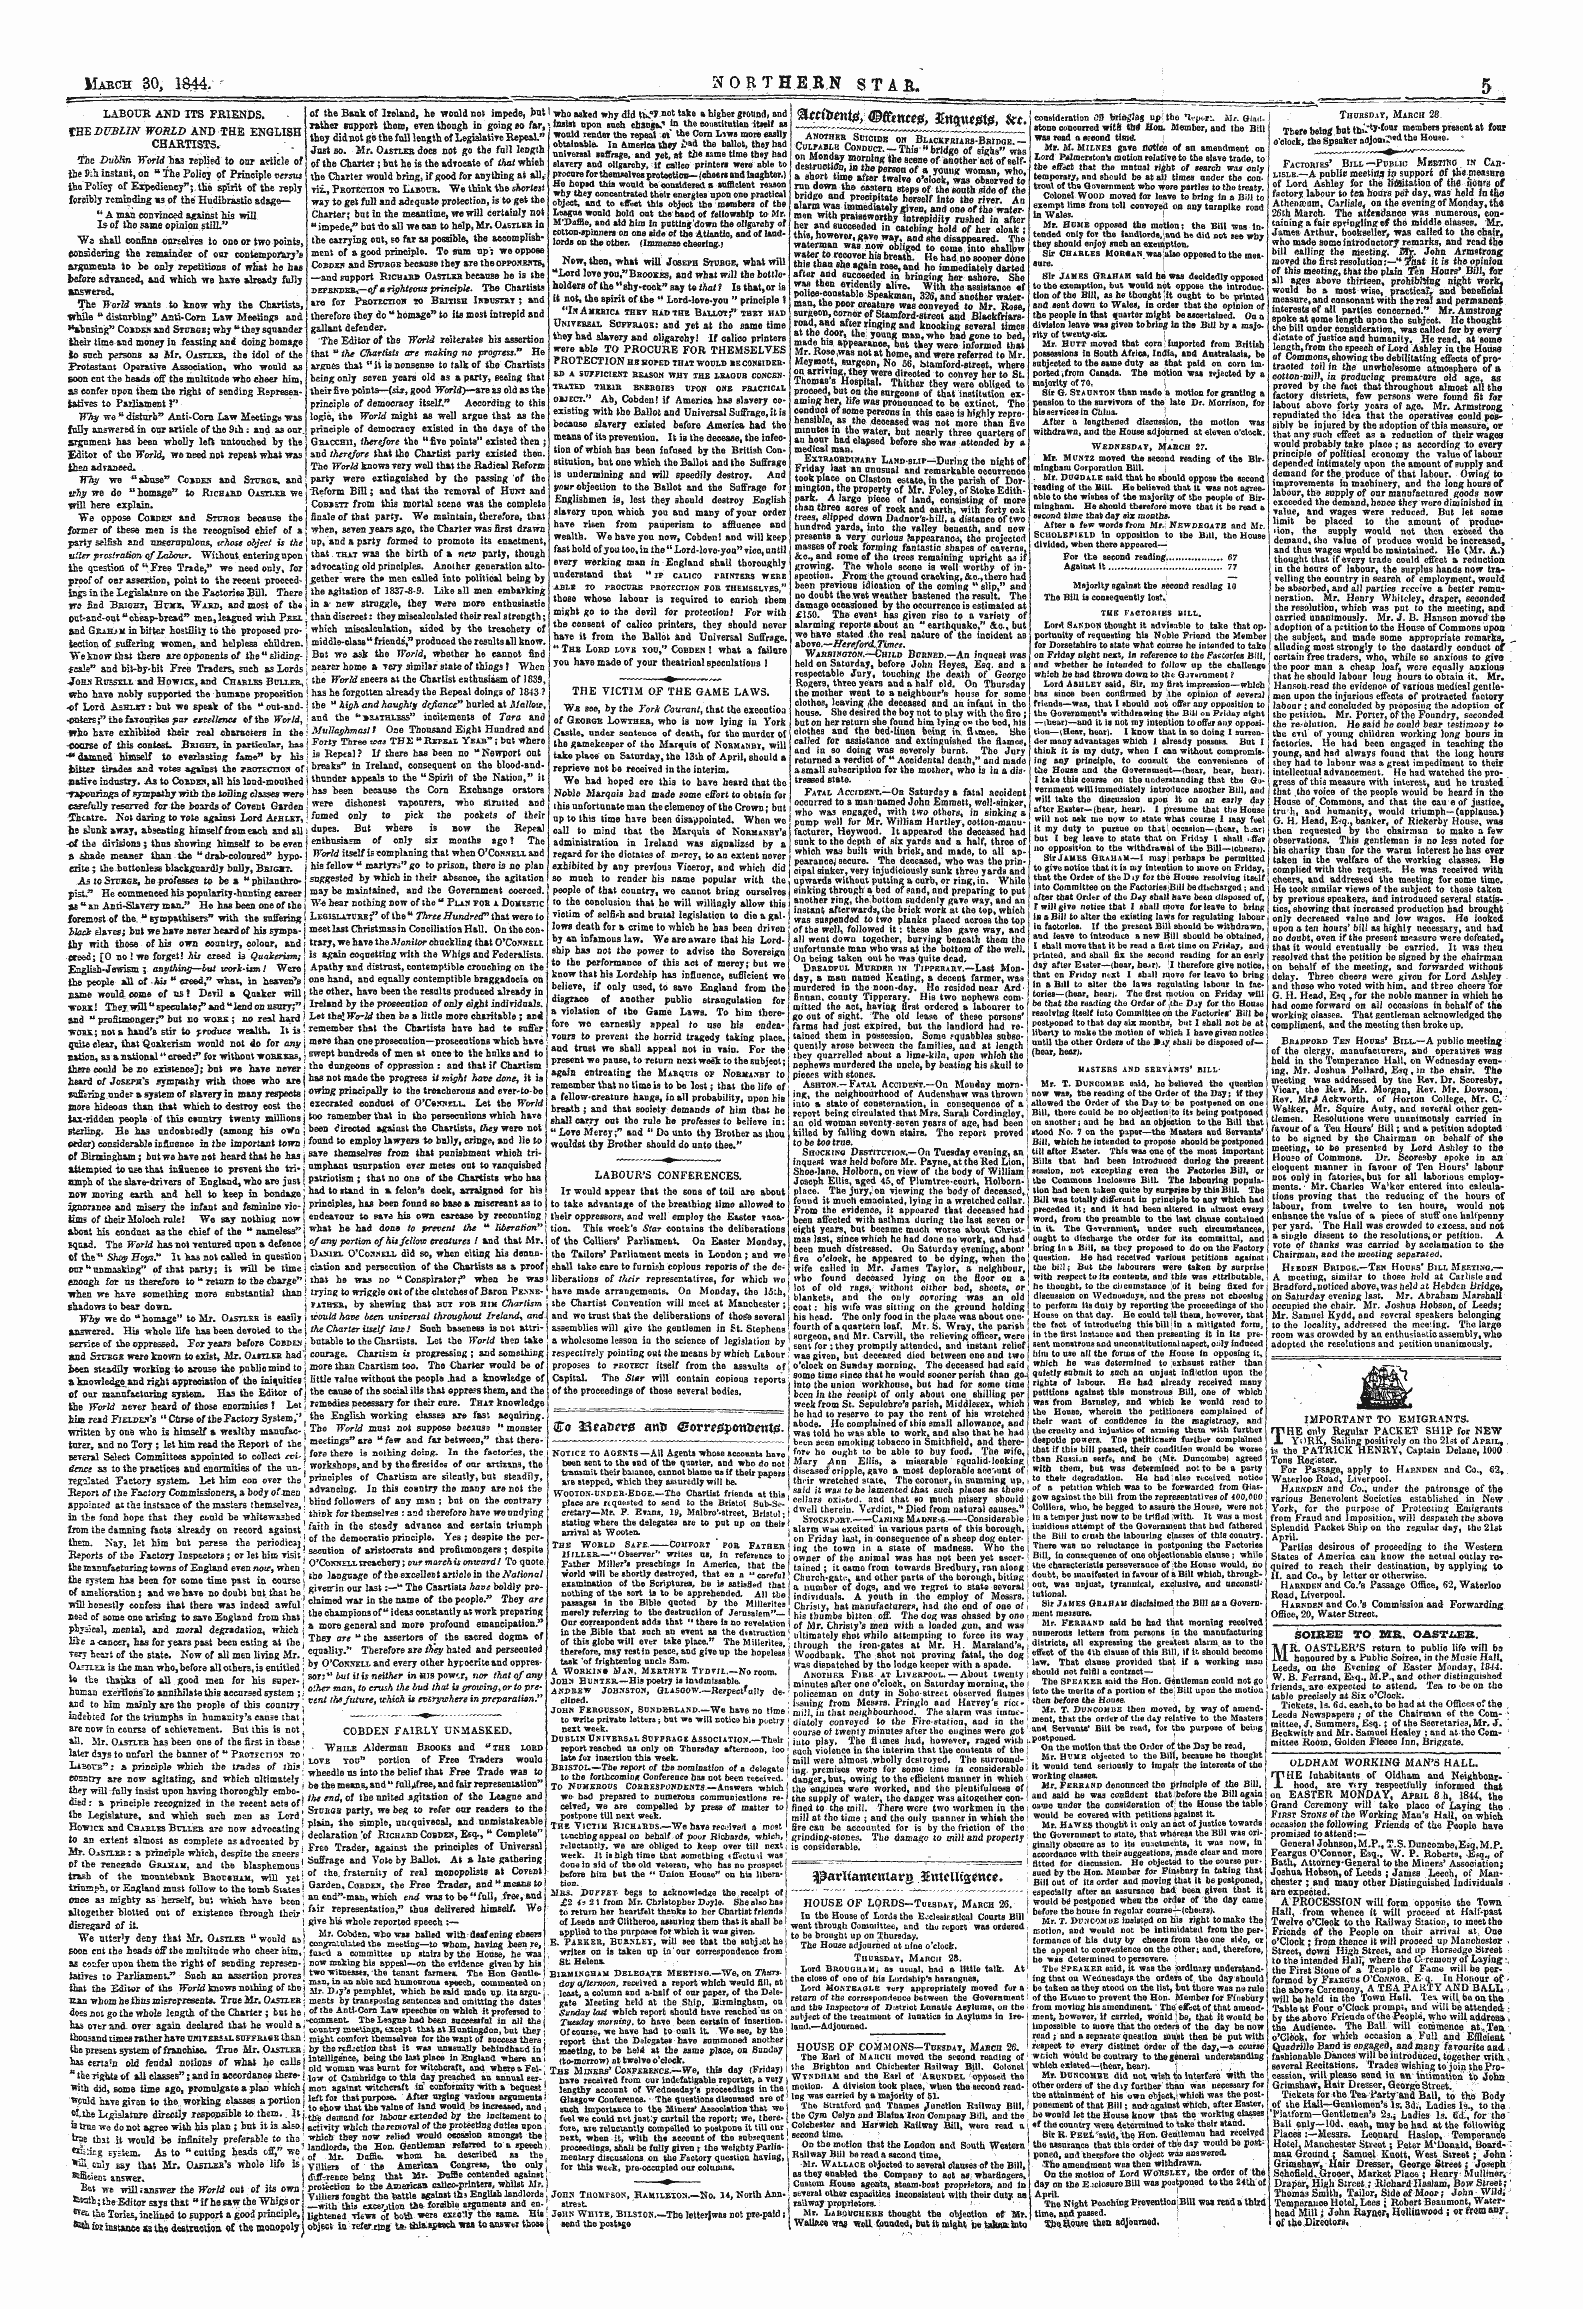 Northern Star (1837-1852): jS F Y, 1st edition - ^ Arltanmuarg Shttcutsencc.